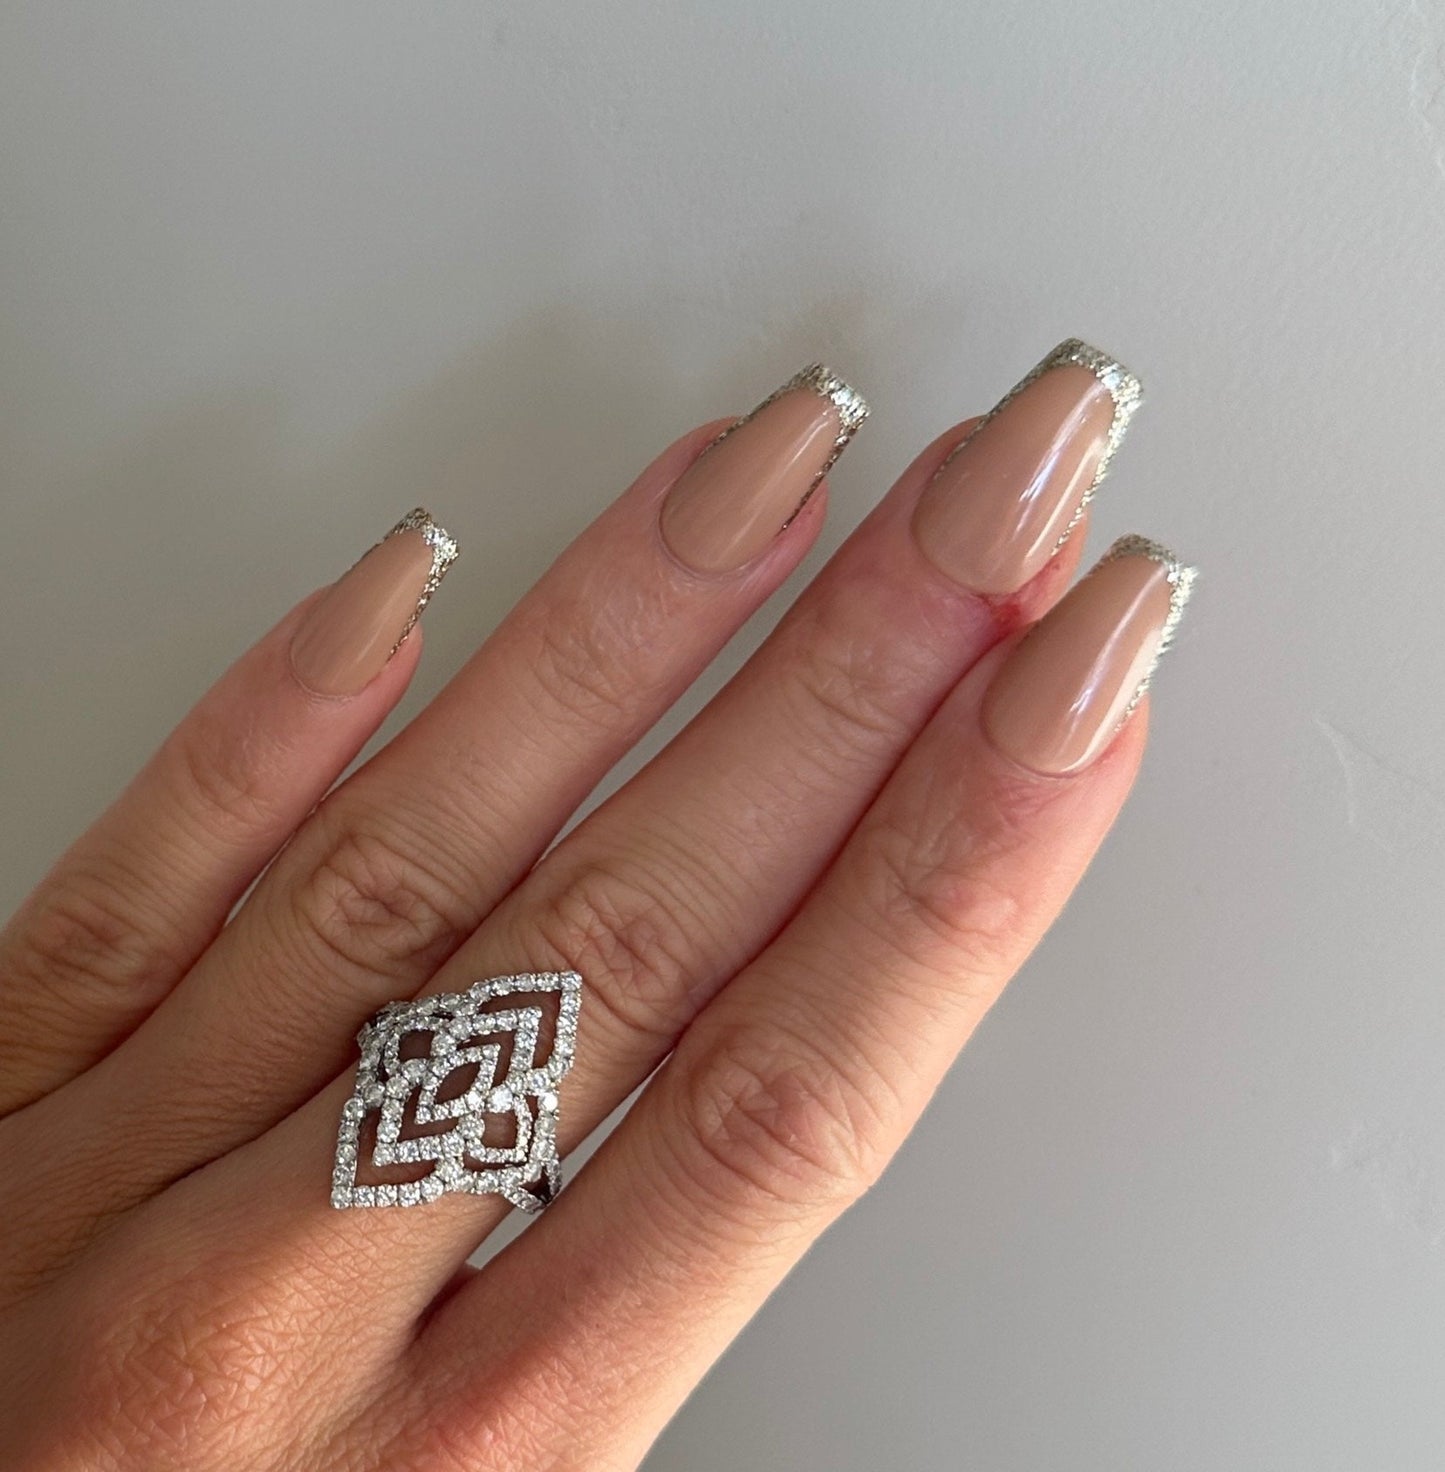 Skinny French: Glitter Tip Press on Nails